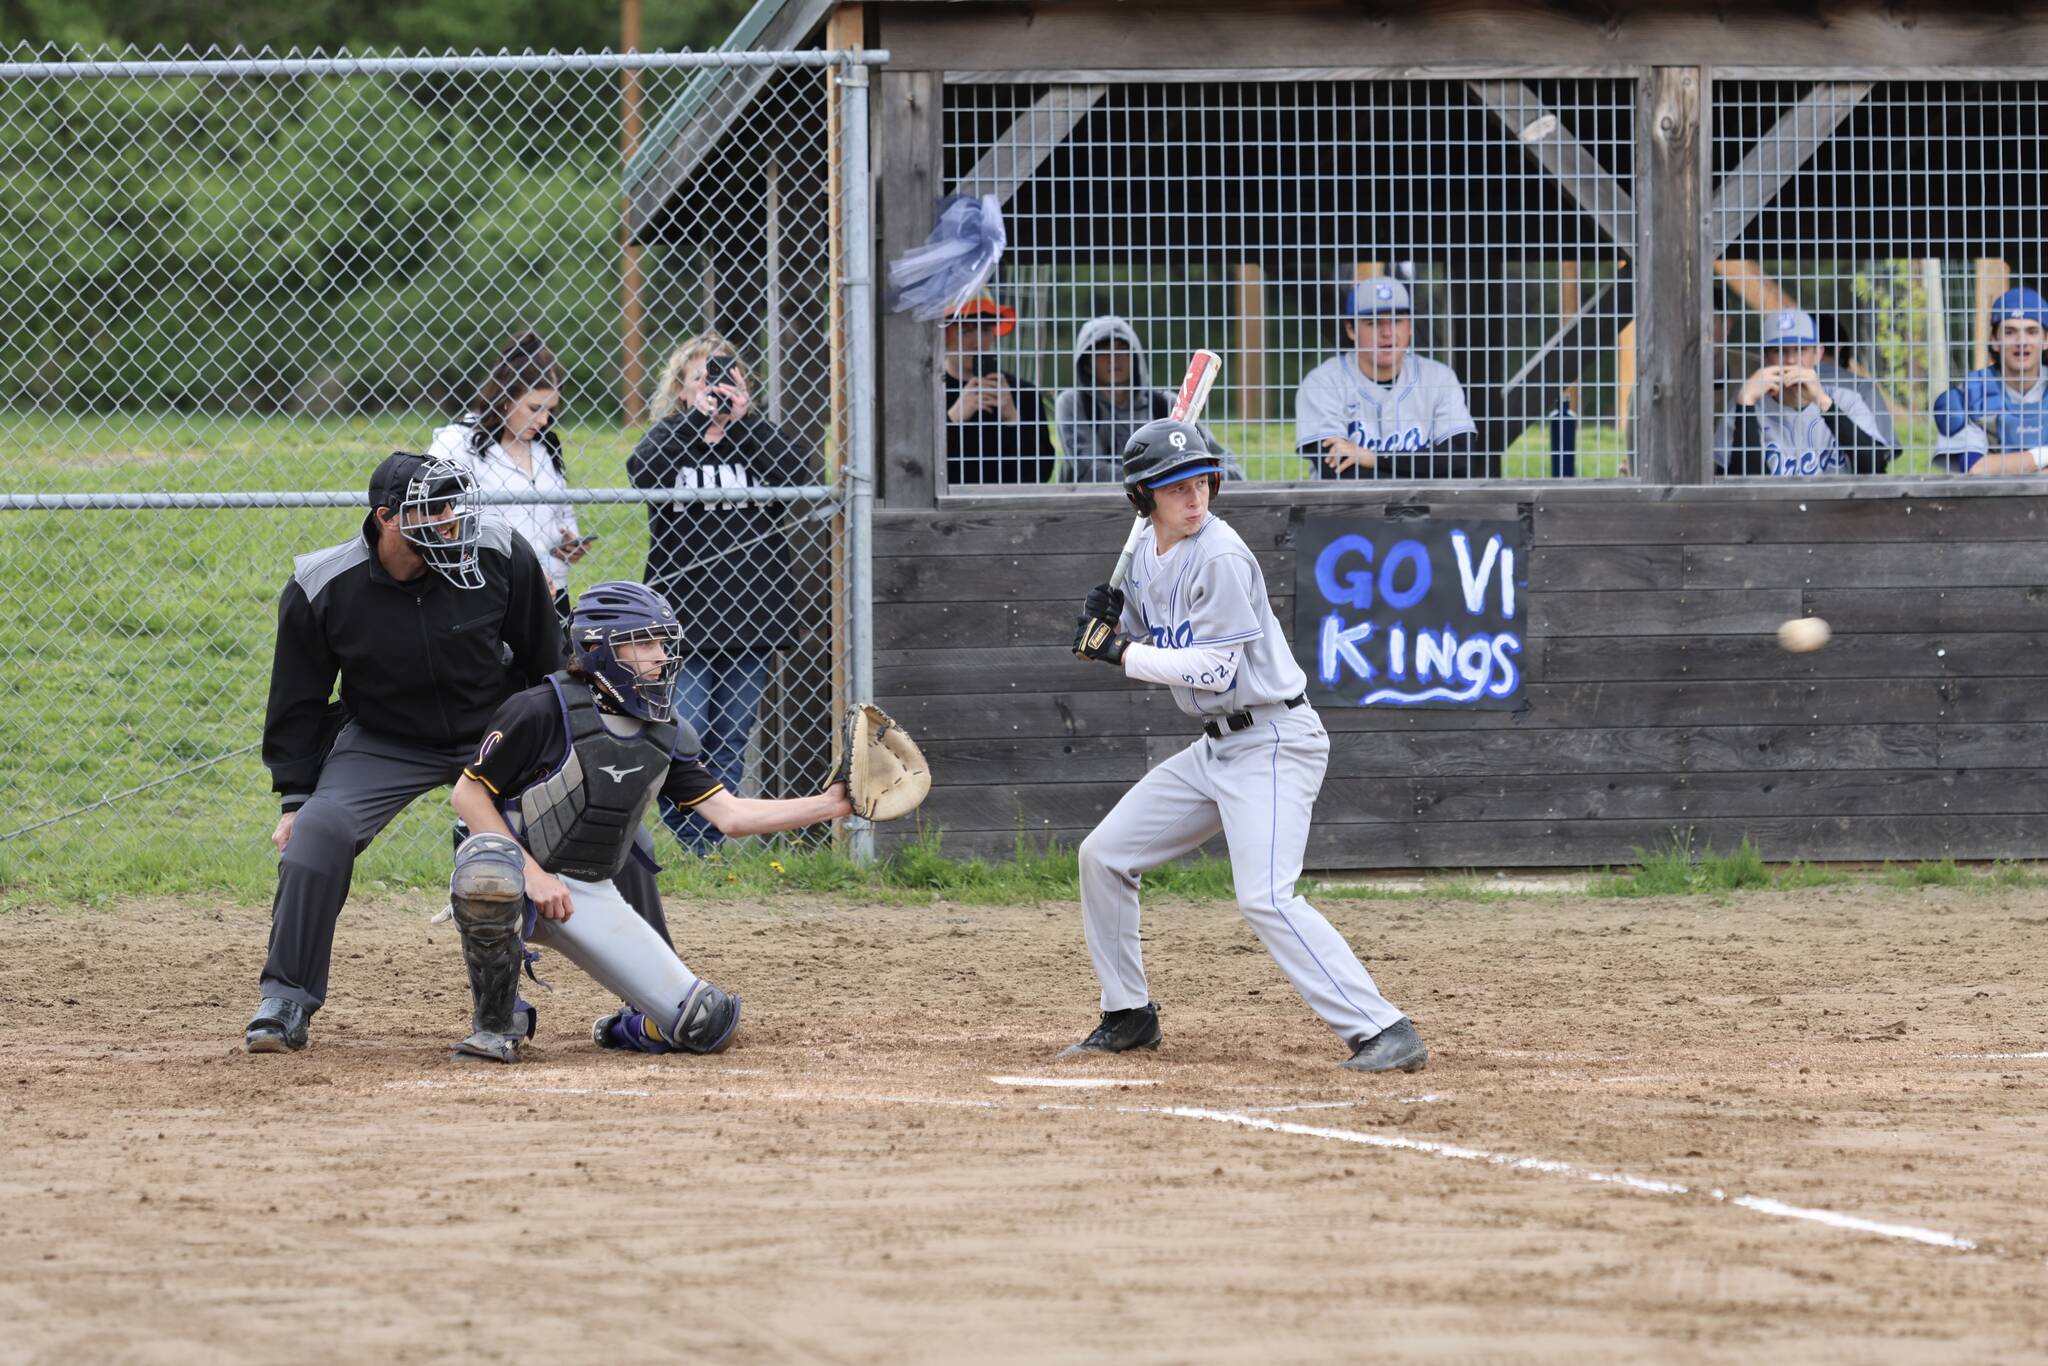 Corey Wiscomb photo.
Matthew Eggenberg at the bat.